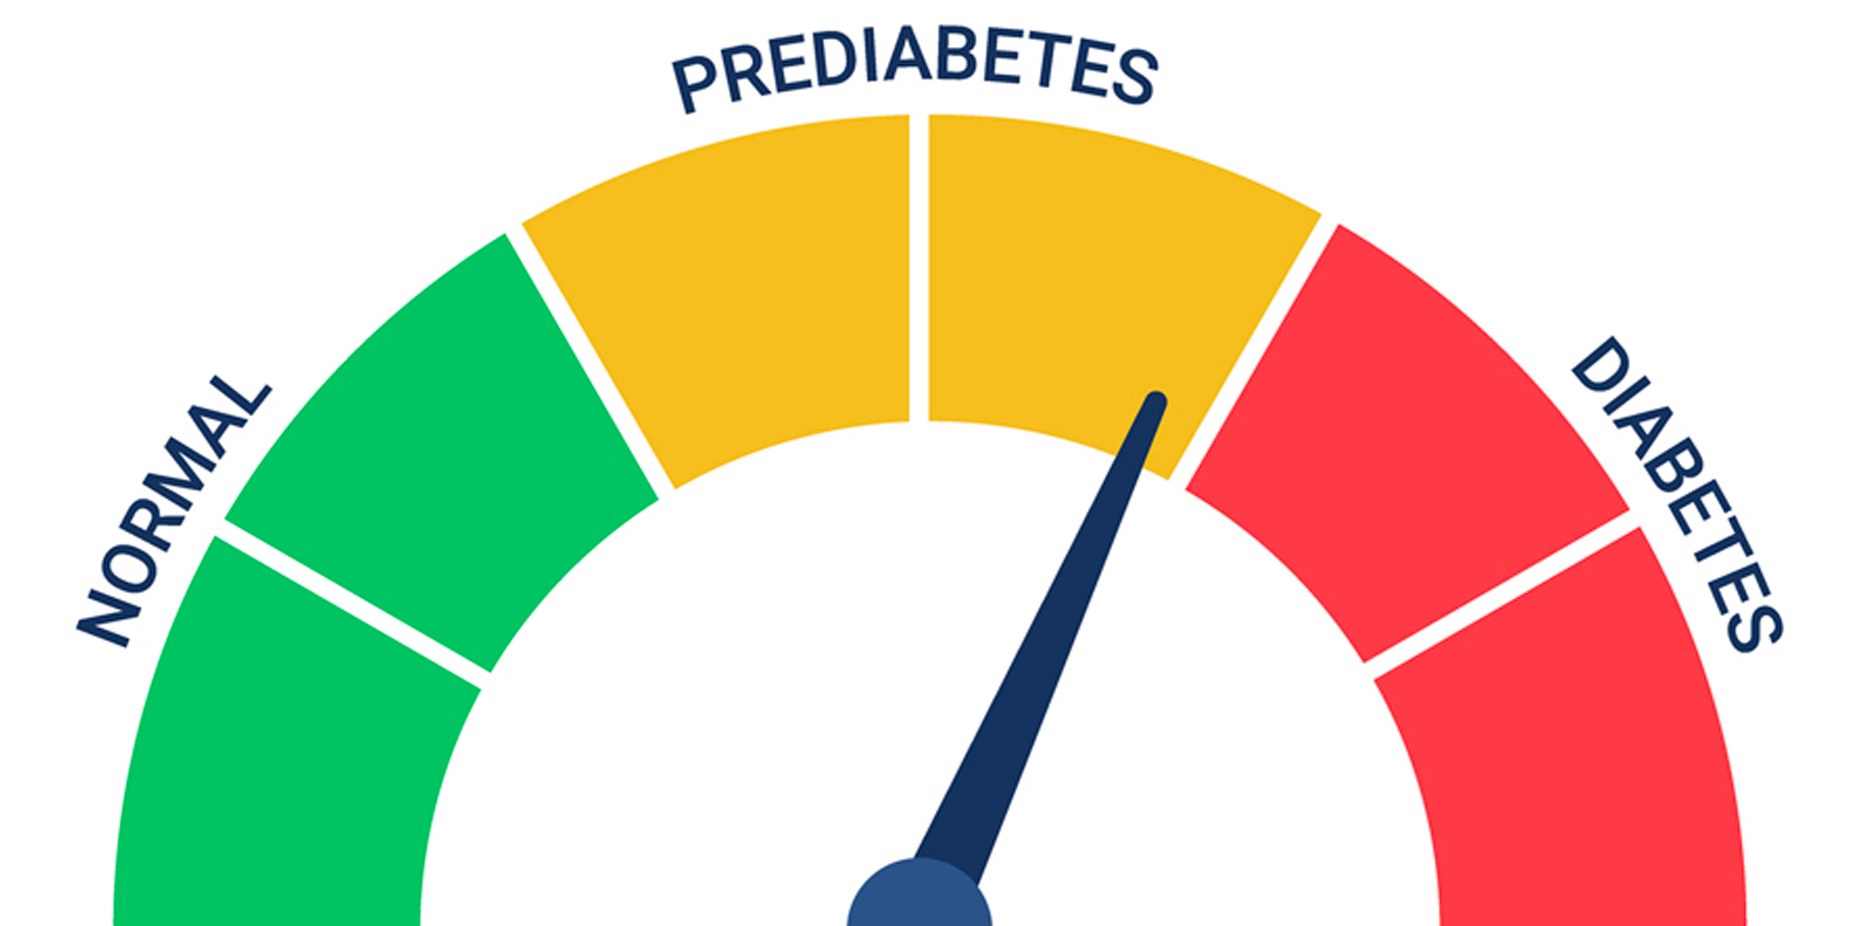 Prediabetes: Symptoms, Causes, Treatment, and More